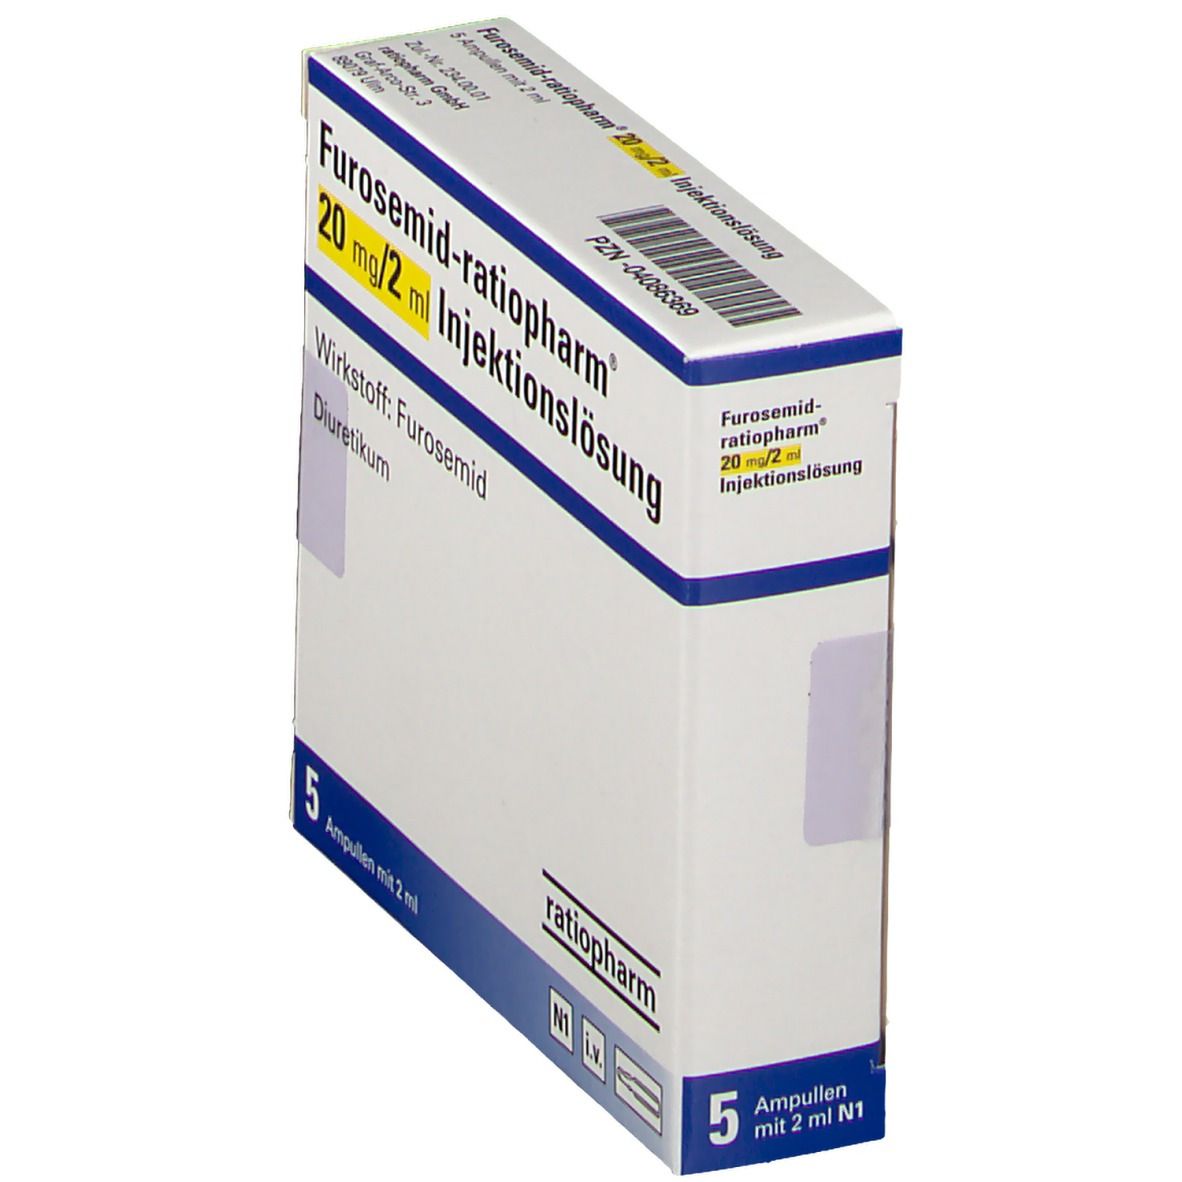 Furosemid-ratiopharm® 20 mg/2 ml